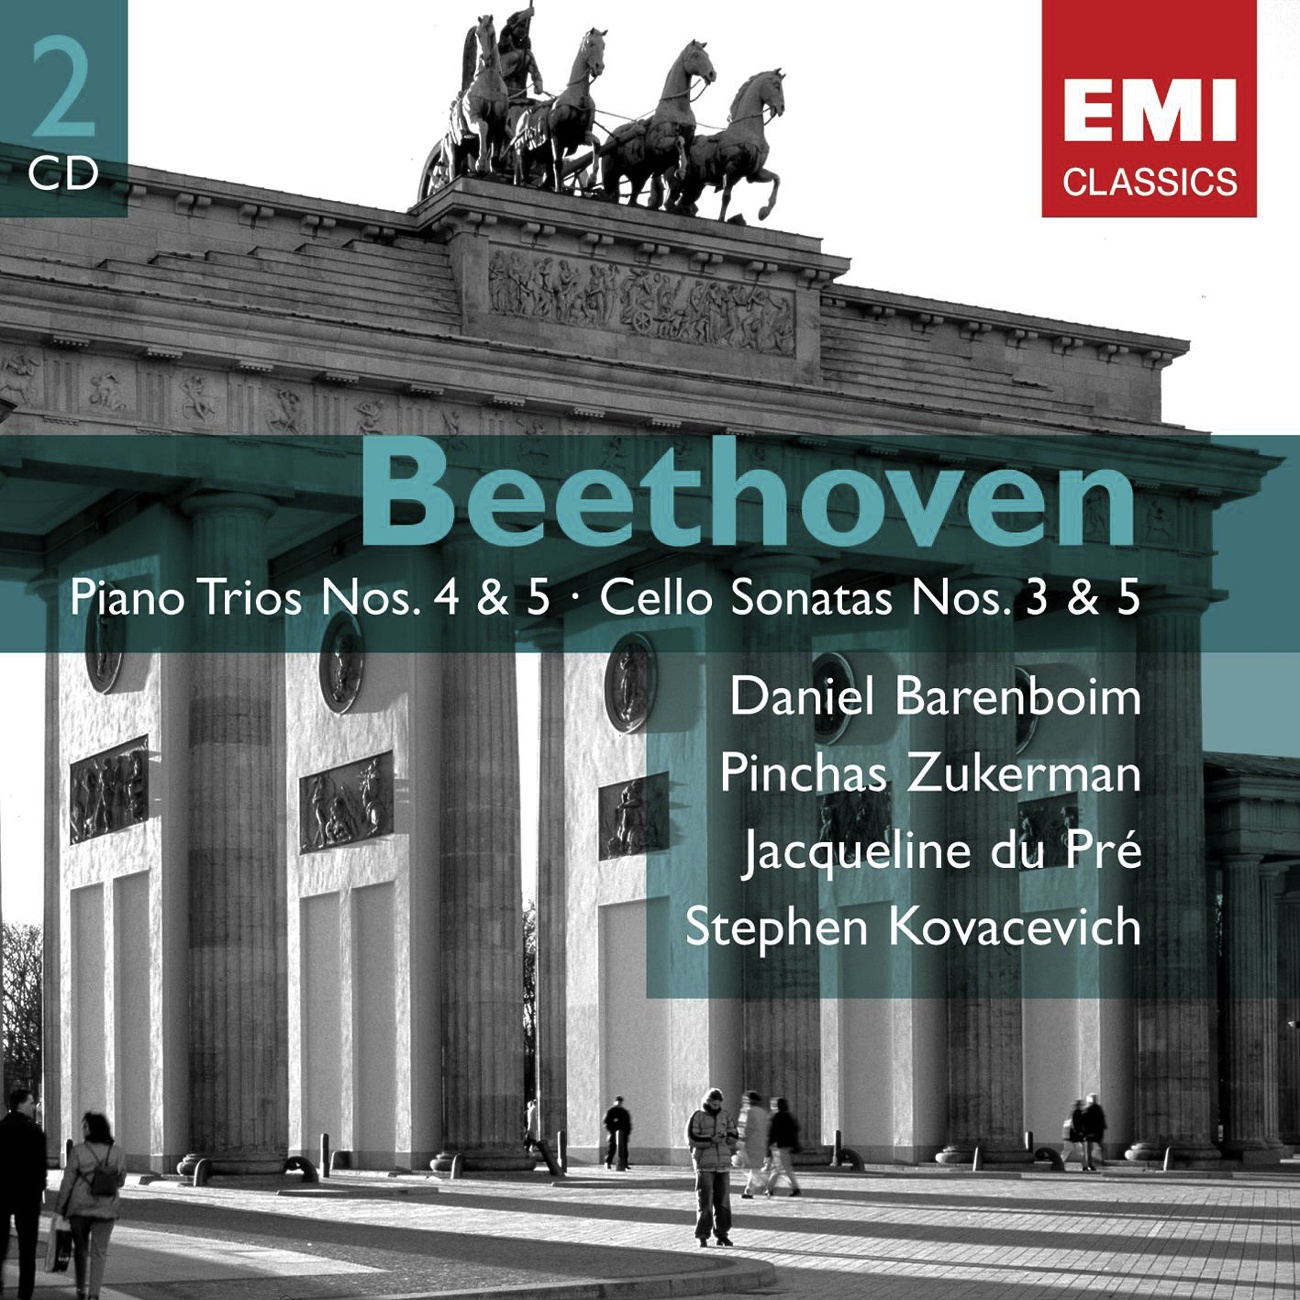 Cello Sonata No. 5 in D Op. 102/2 (2001 Digital Remaster): I. Allegro con brio